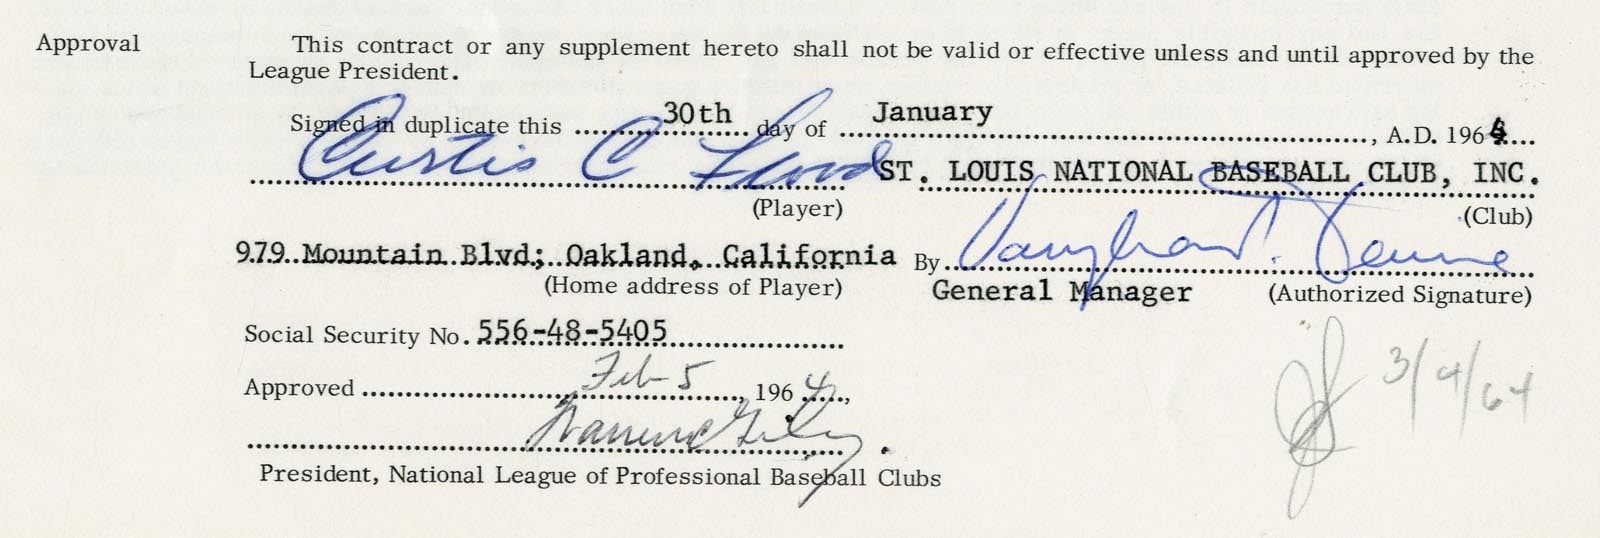 St. Louis Cardinals - 1964 Curt Flood Signed Cardinals Uniform Player's Contract - Championship Season